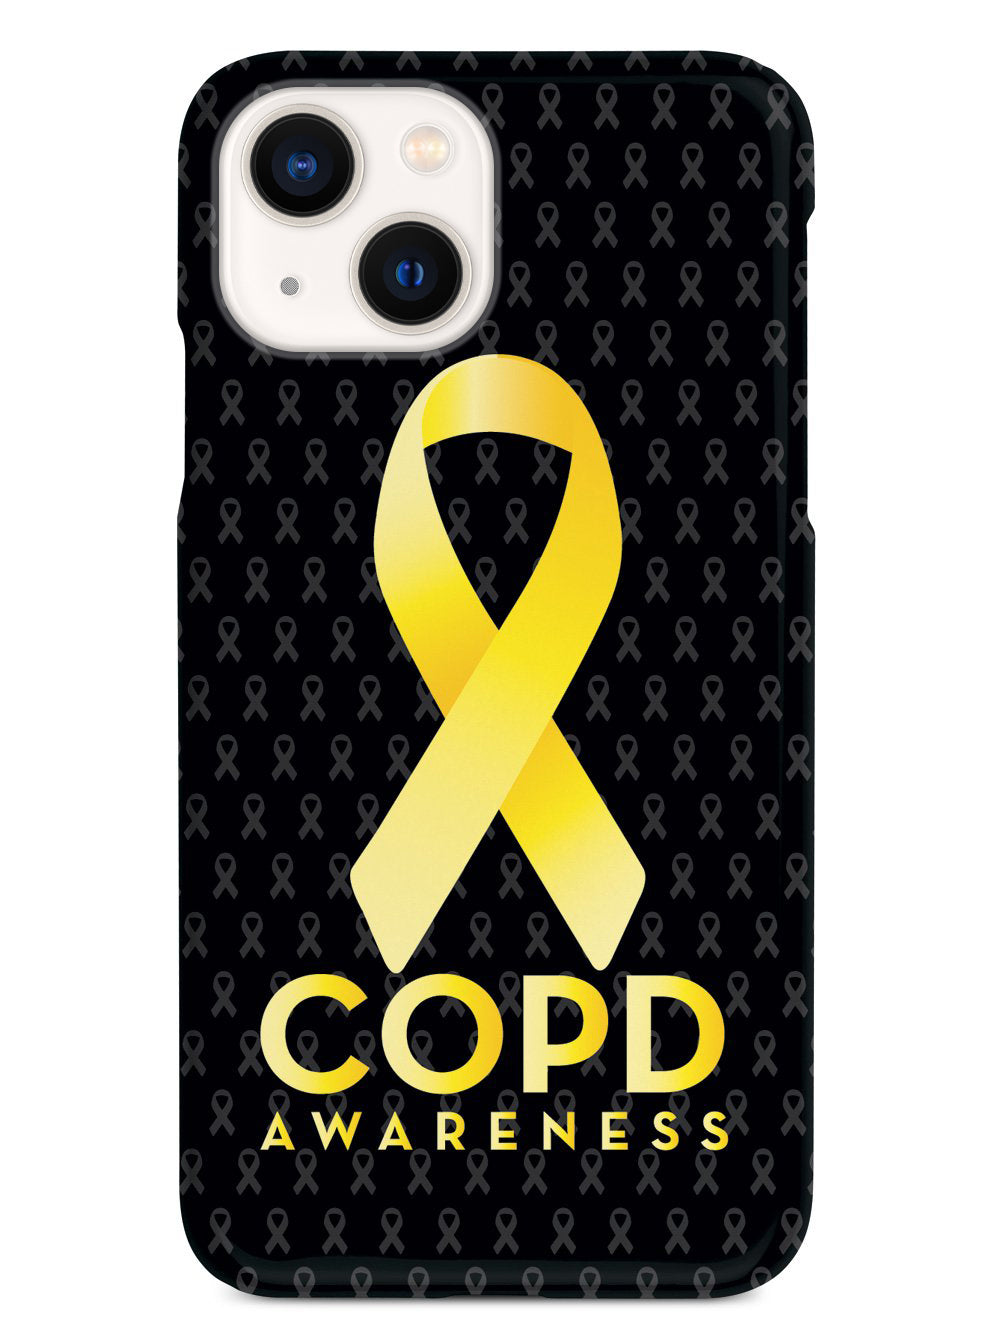 COPD Awareness - Black Case